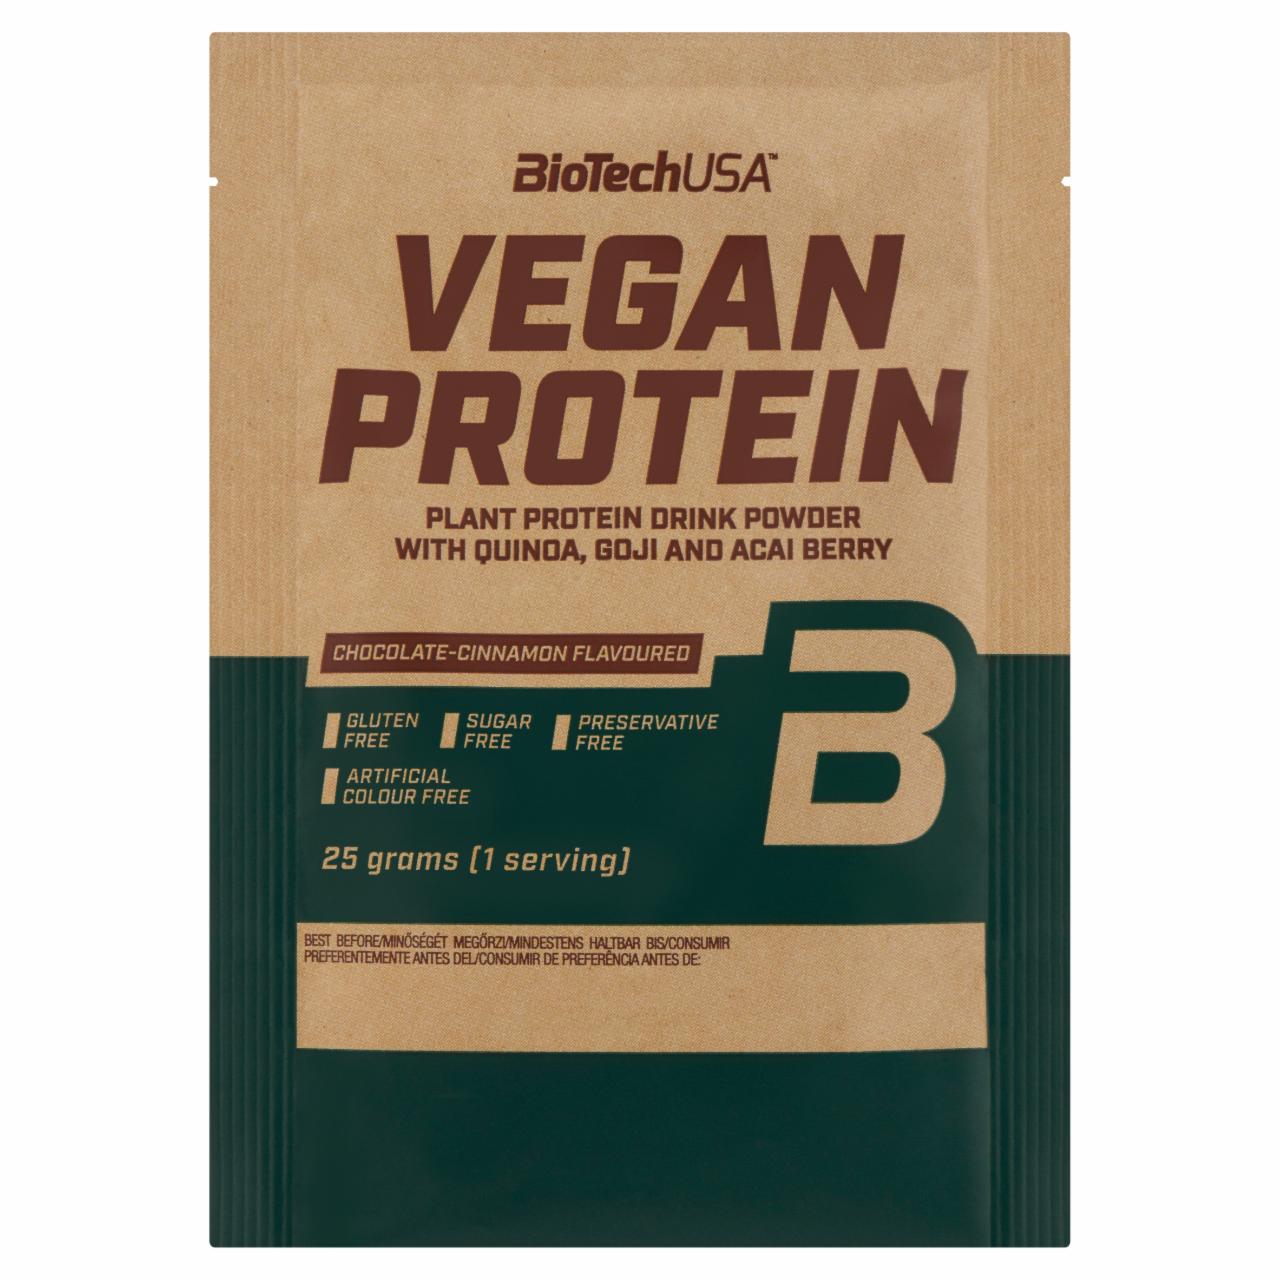 Fotografie - Vegan protein chocolate-cinnamon flavoured BioTechUSA